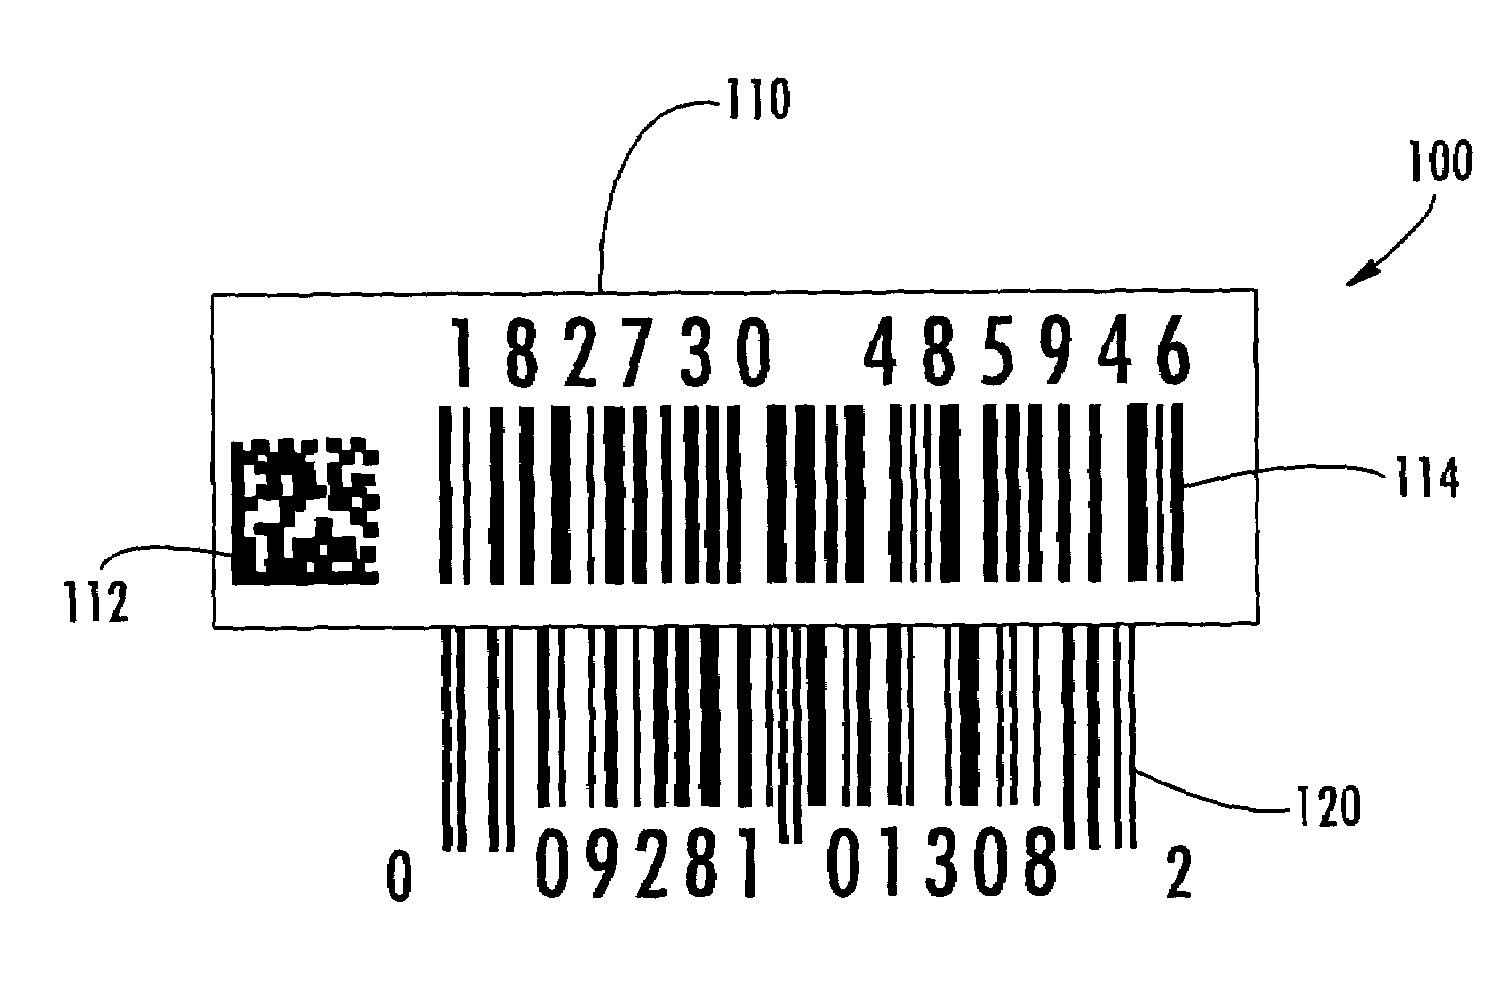 Method of labeling an item for item-level identification